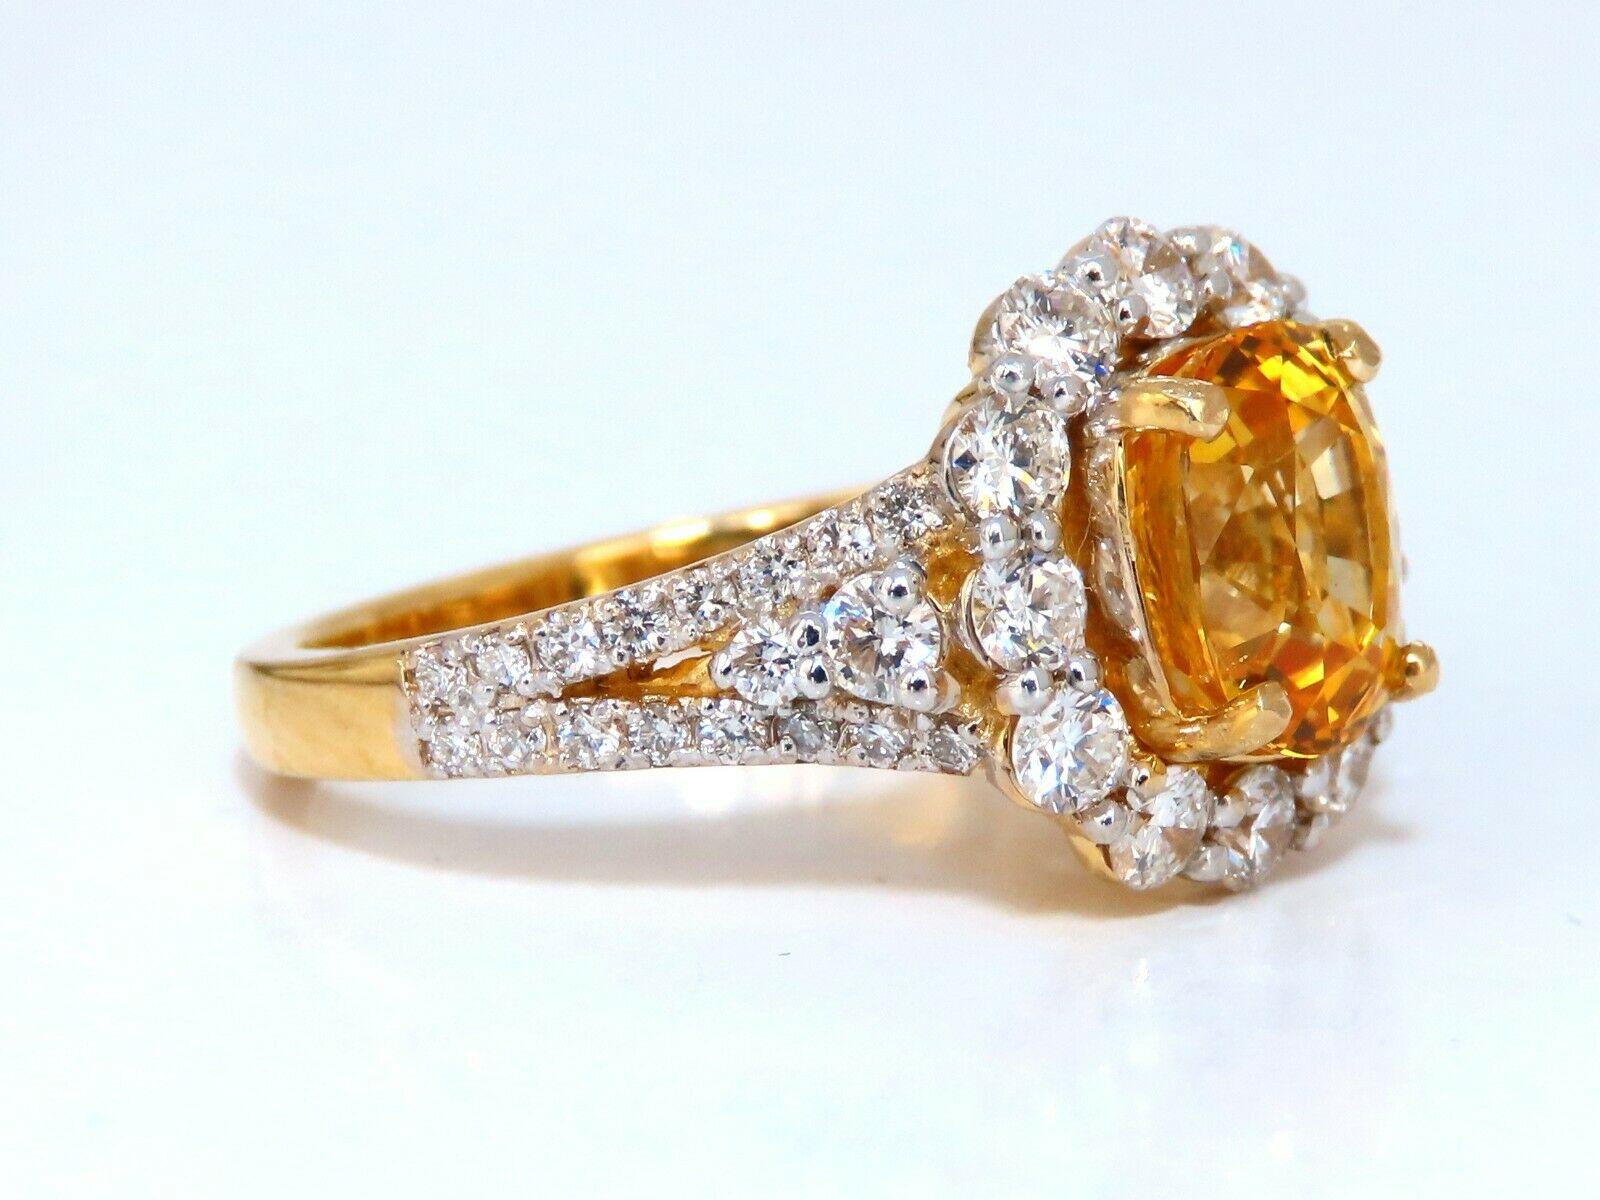 8.92 carat canary yellow diamond